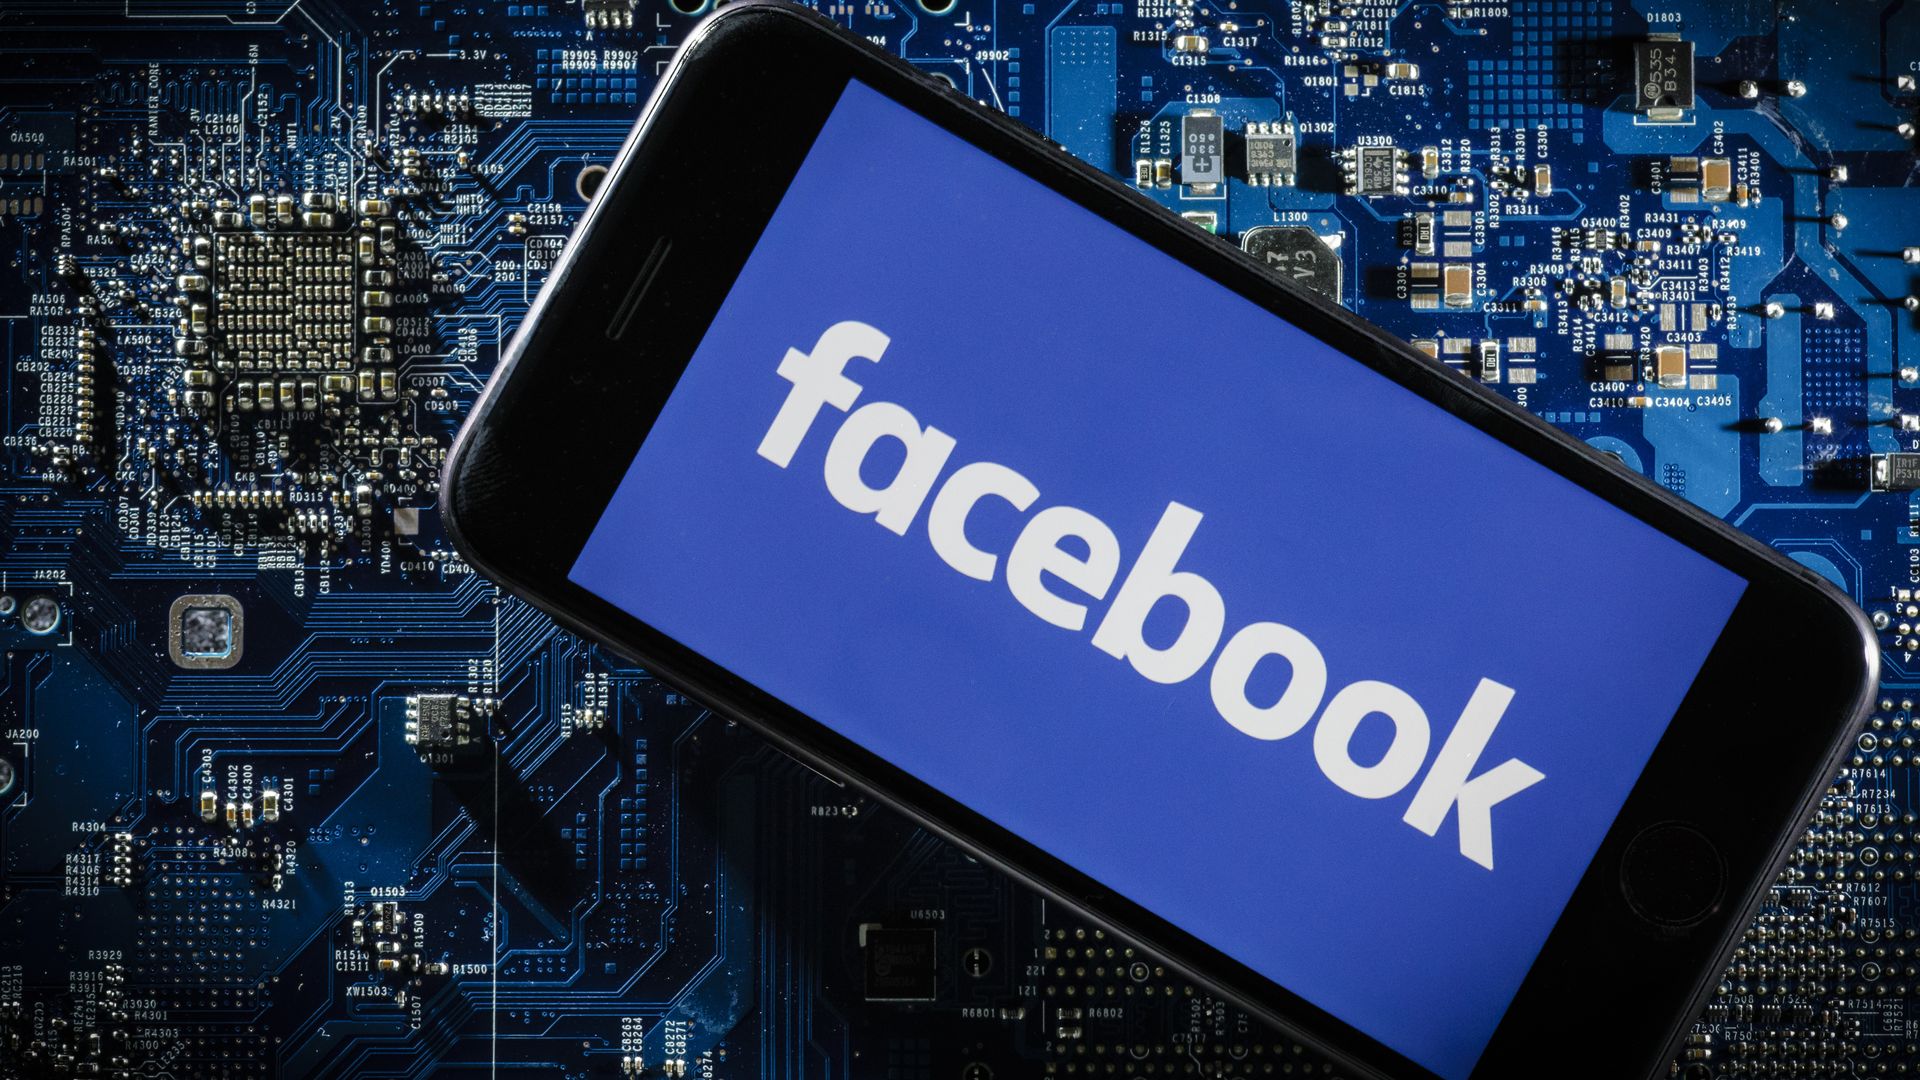 A phone displays the Facebook logo